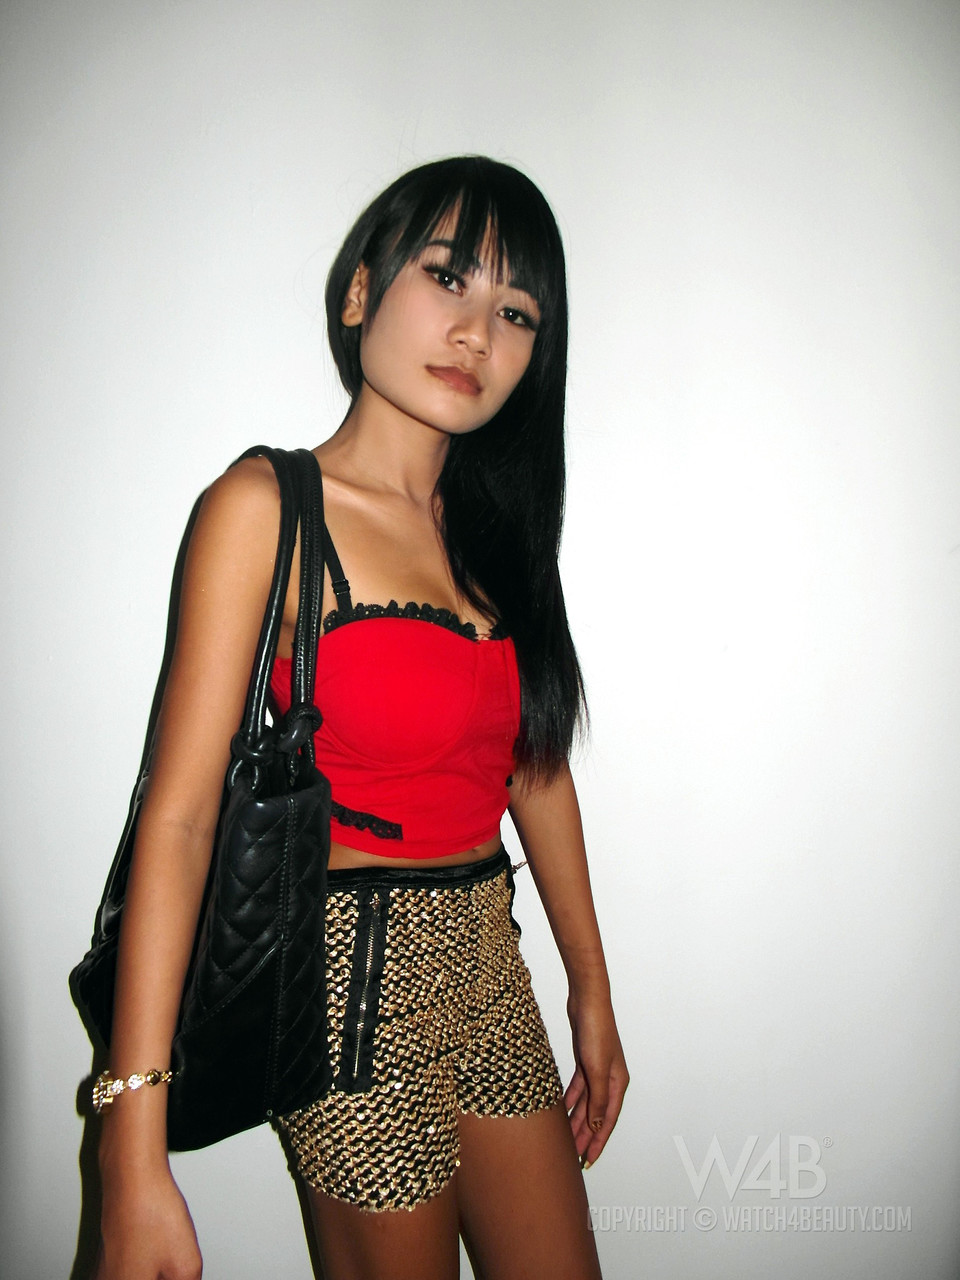 Delicious Asian models strip and flaunt their sexy slender bodies порно фото #424179210 | Watch 4 Beauty Pics, W4B, Thai, мобильное порно